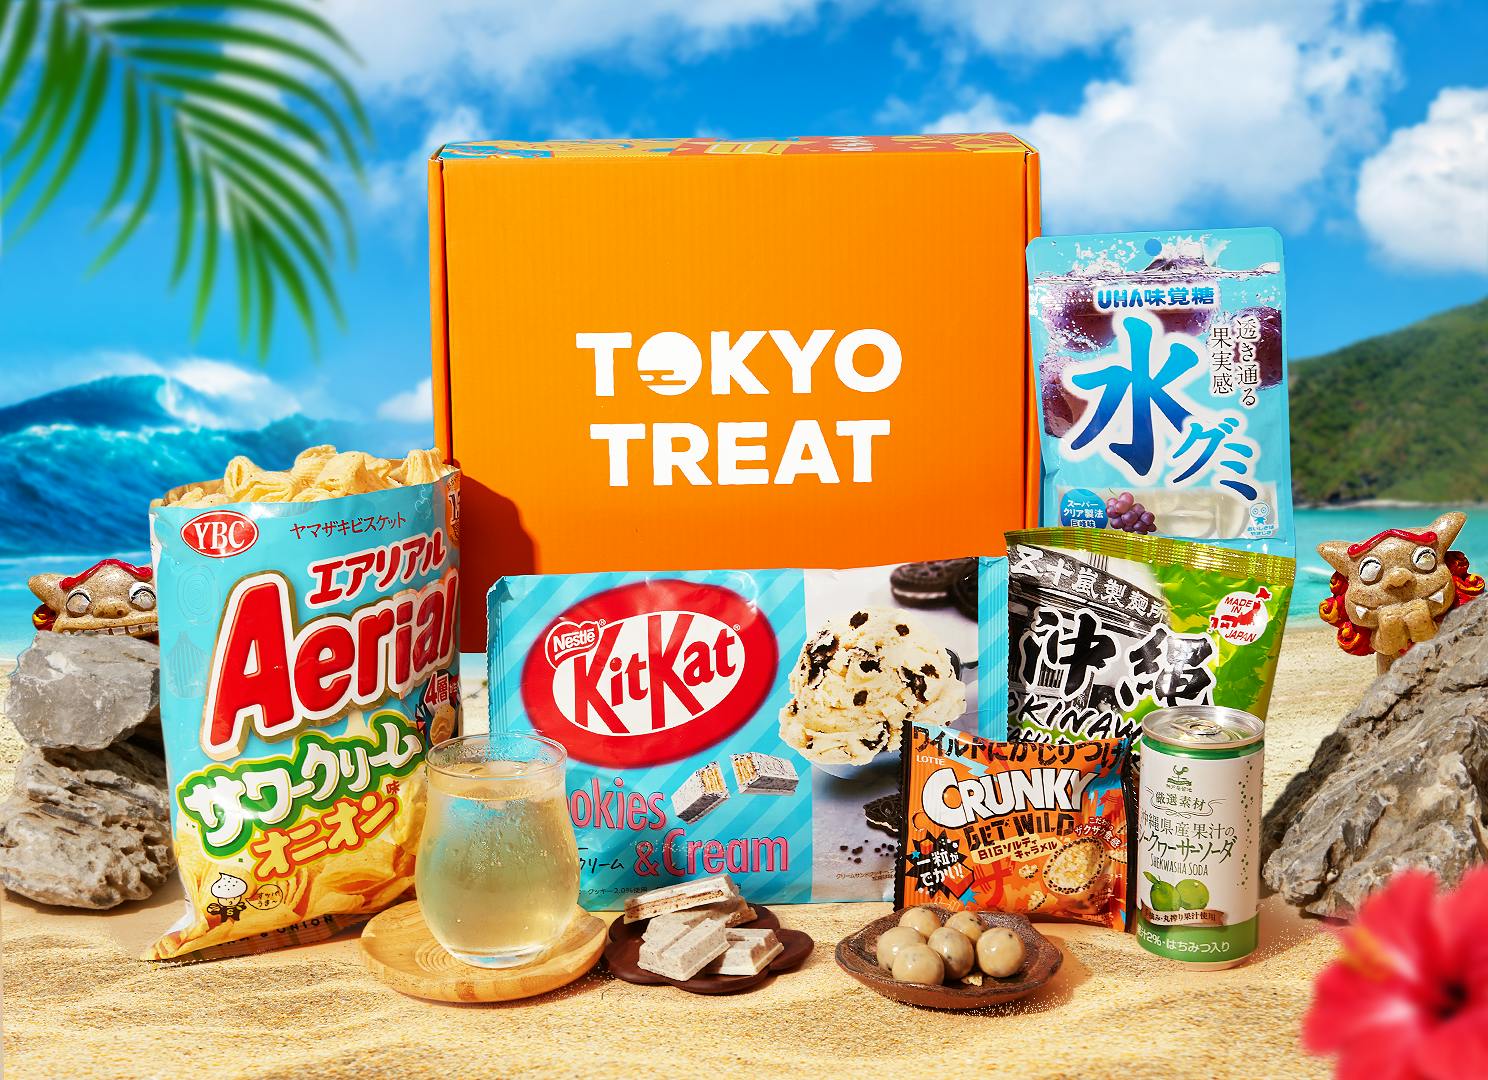 The Okinawa Snackin' Oasis box items sit on an Okinawa beach, surrounded by Okinawa motifs.